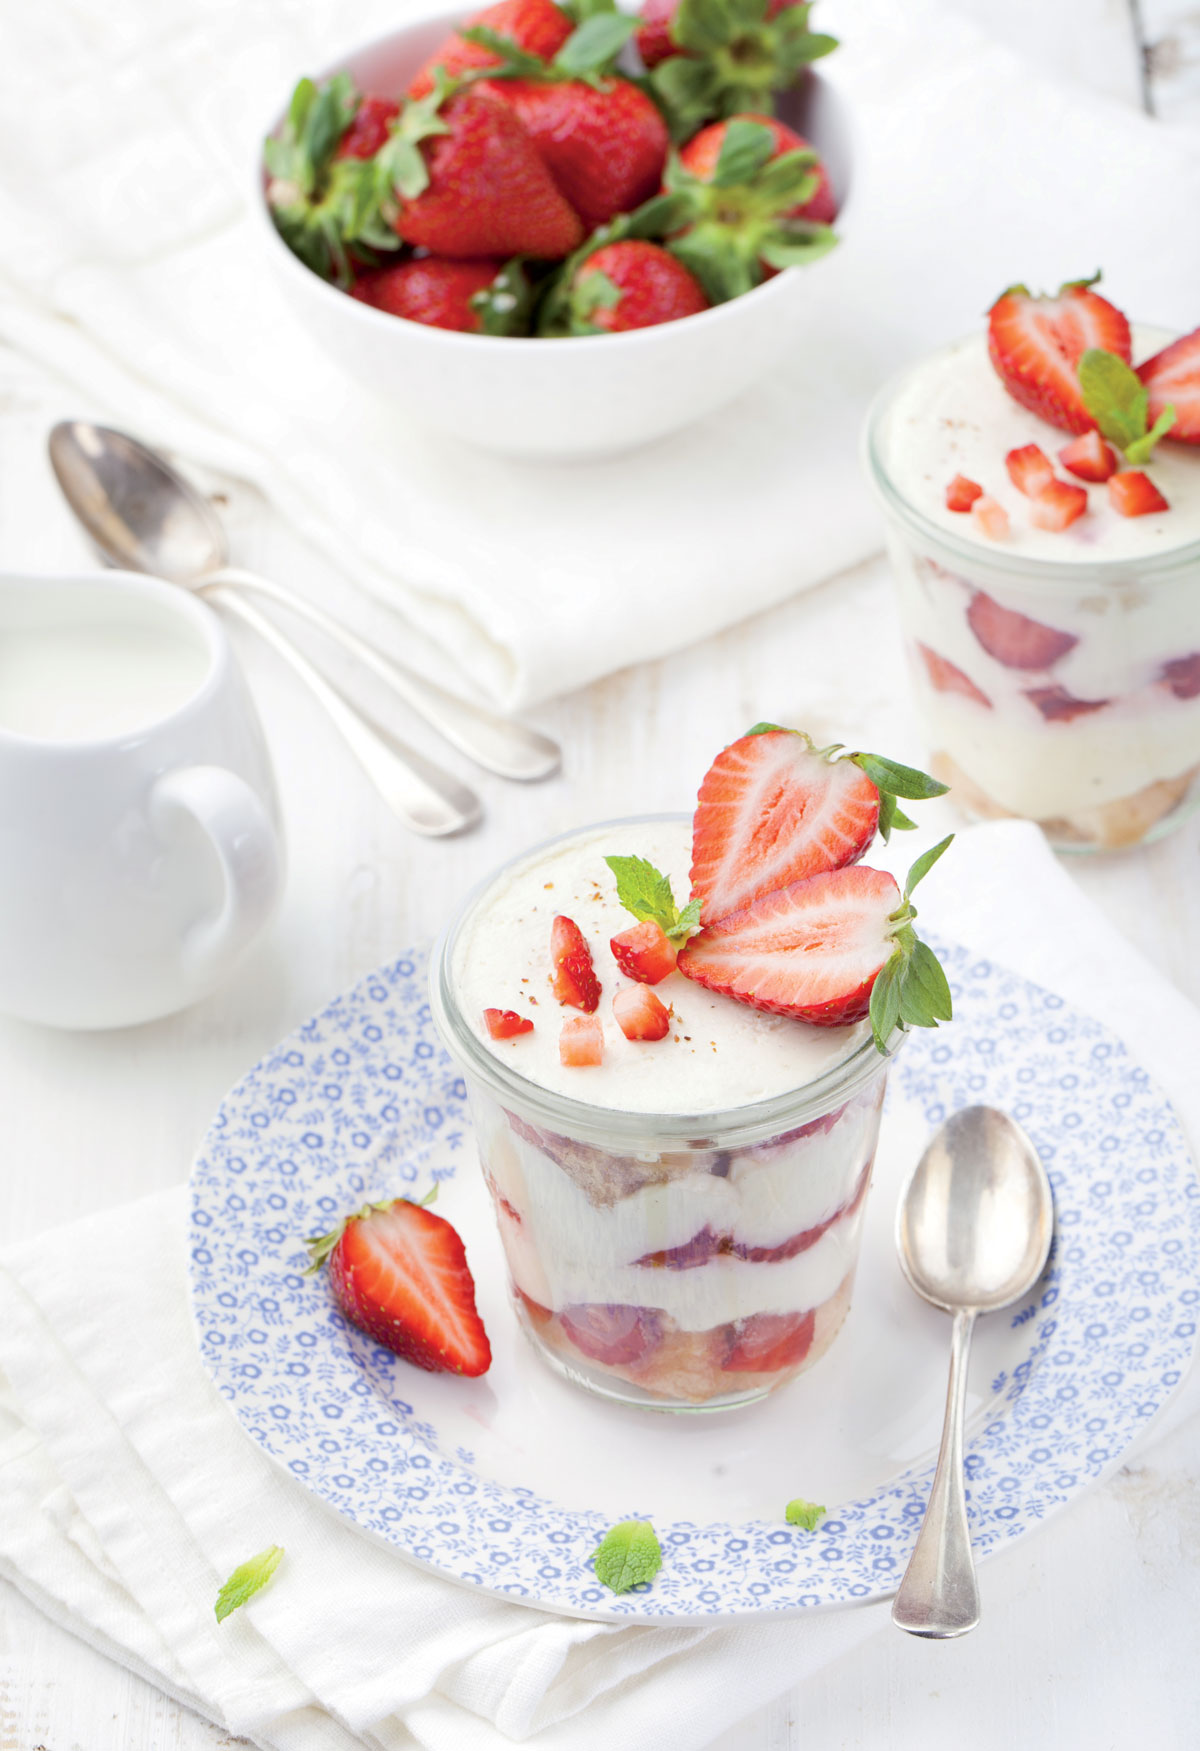 Recepty s jahodami: Ovocný refresh s jogurtem